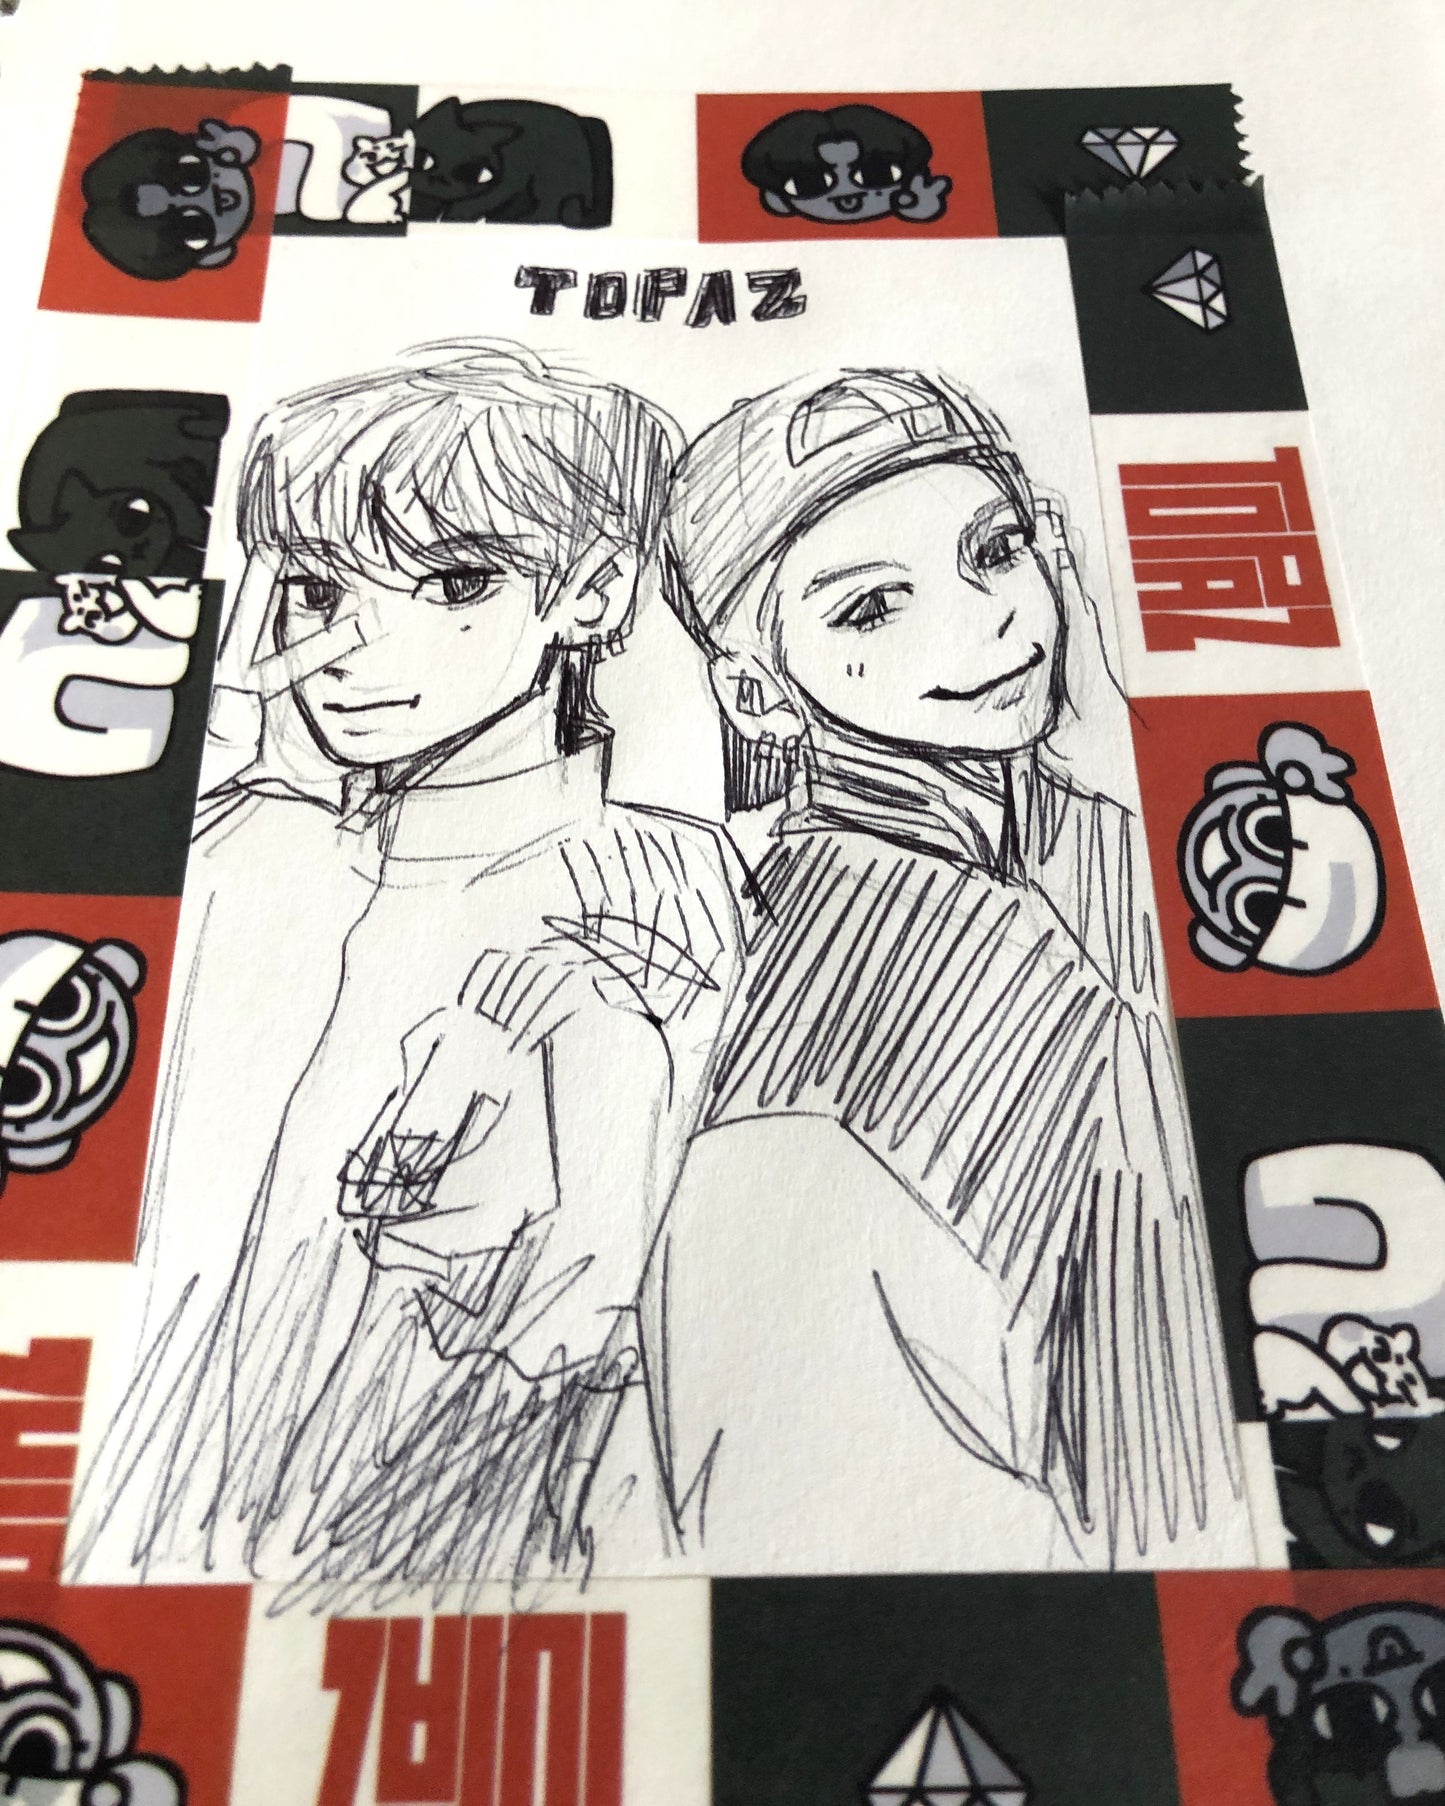 Topaz Washi Tape